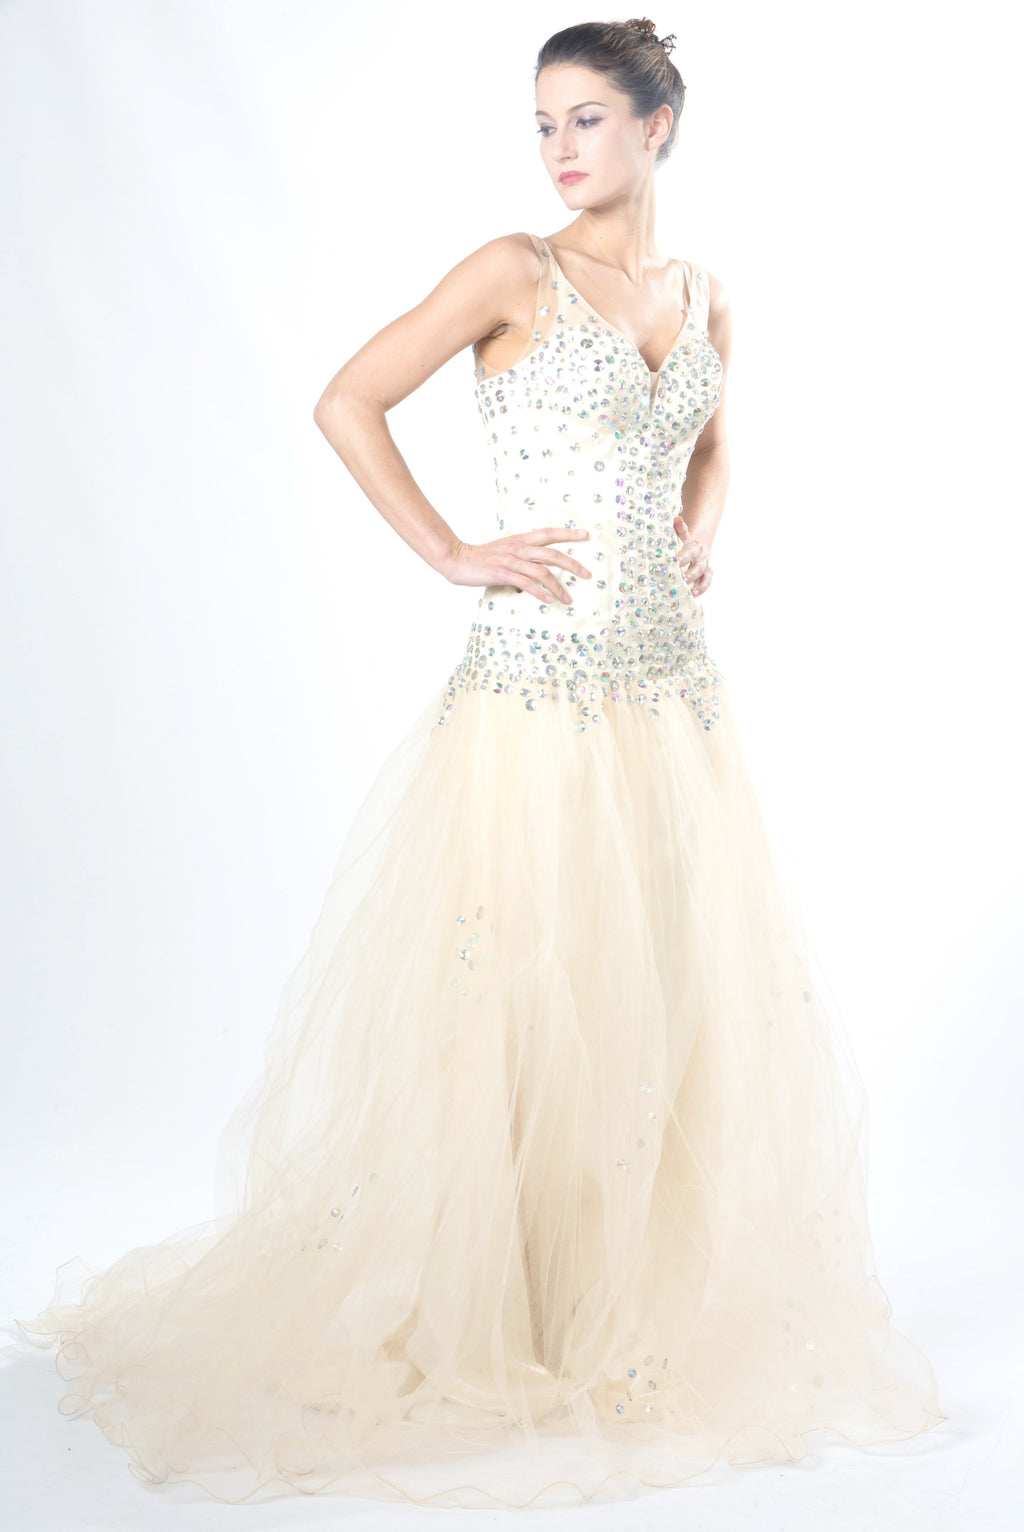 Women's Beige Bridal Dress. Sparkle Princess Evening Gown.Princess Prom EM00031